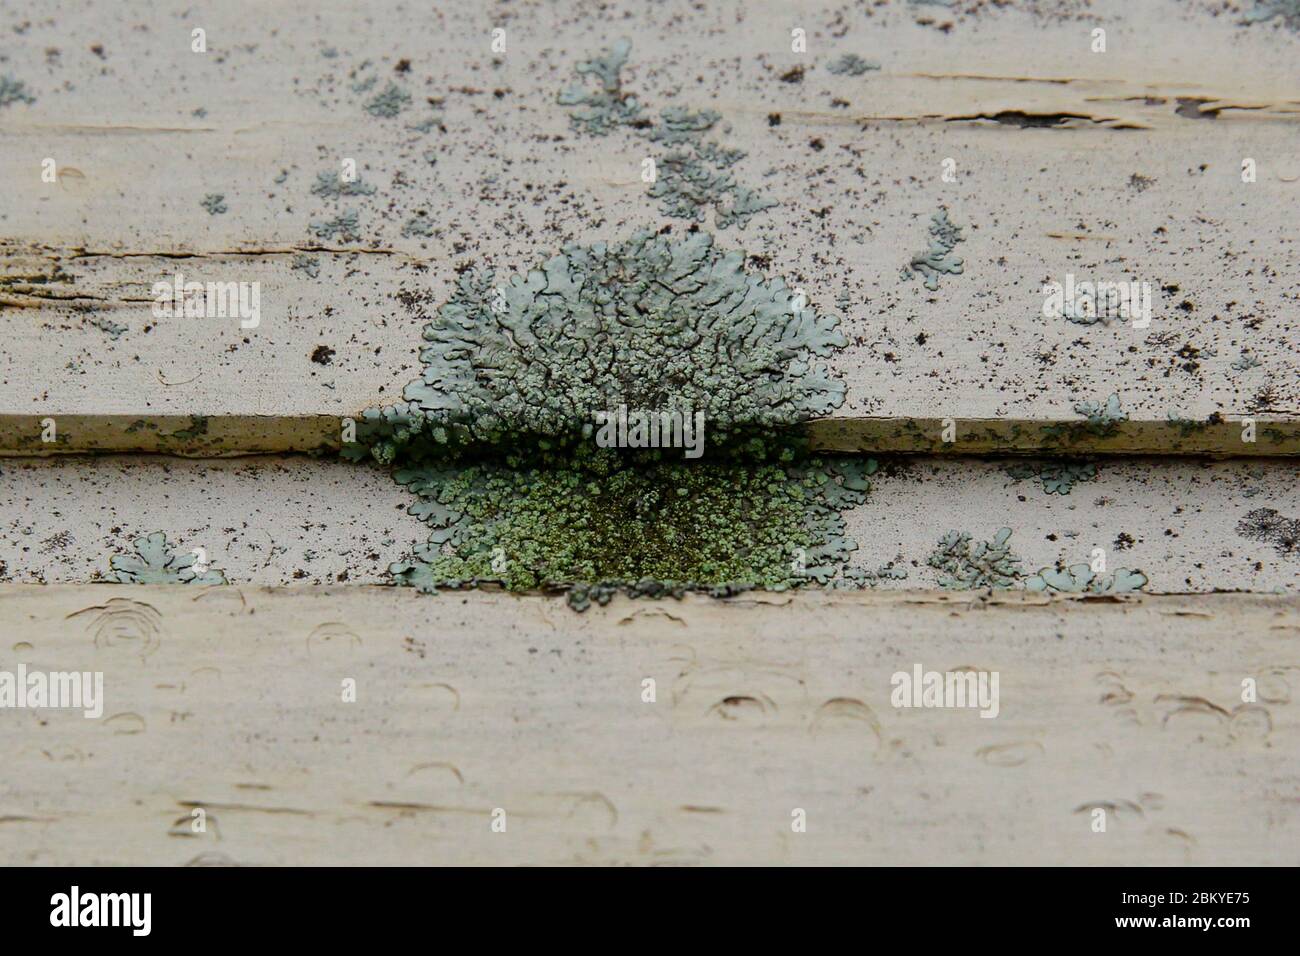 Lichen (Lecanora muralis) growing on weathered timber. Stock Photo